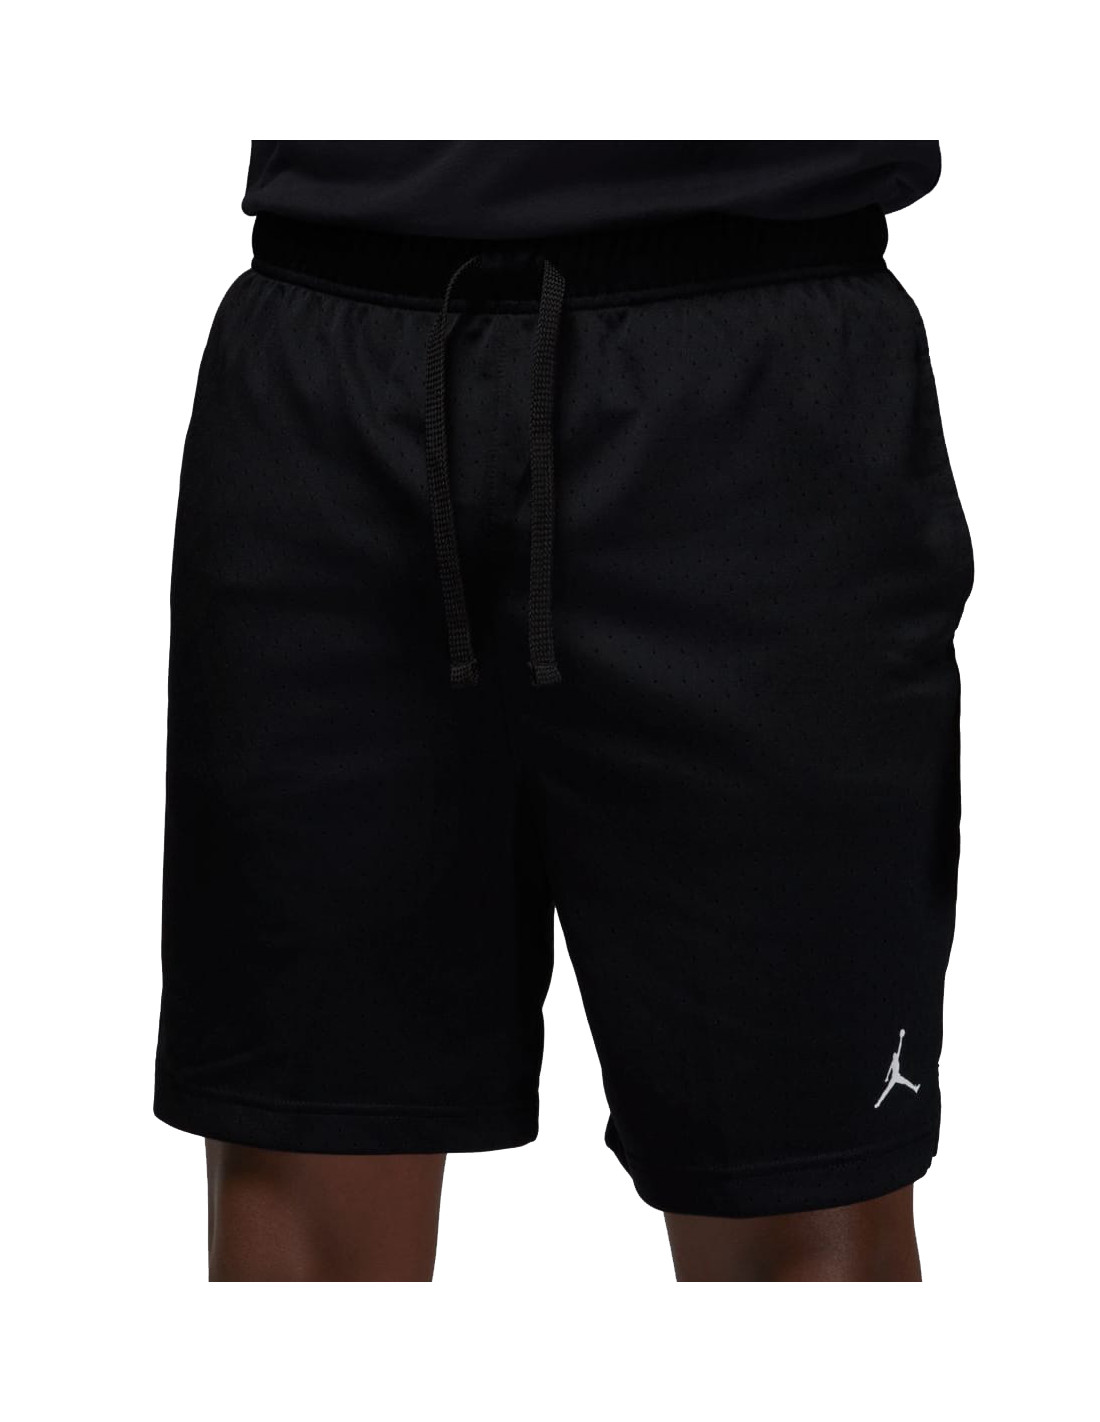 Jordan Sport Men's Mesh Shorts